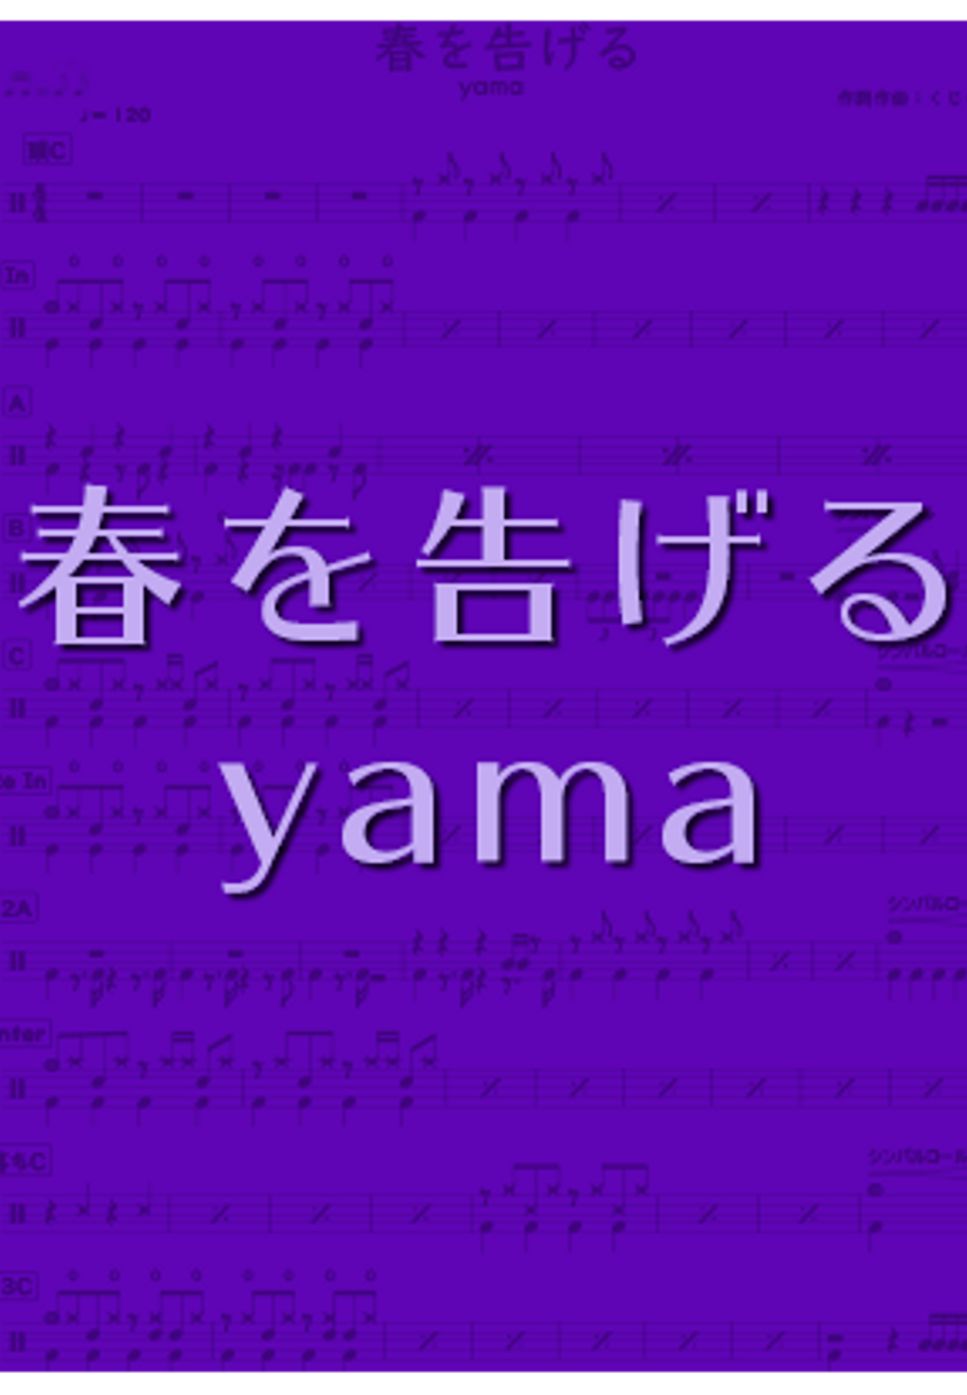 yama - 春を告げる by DSU